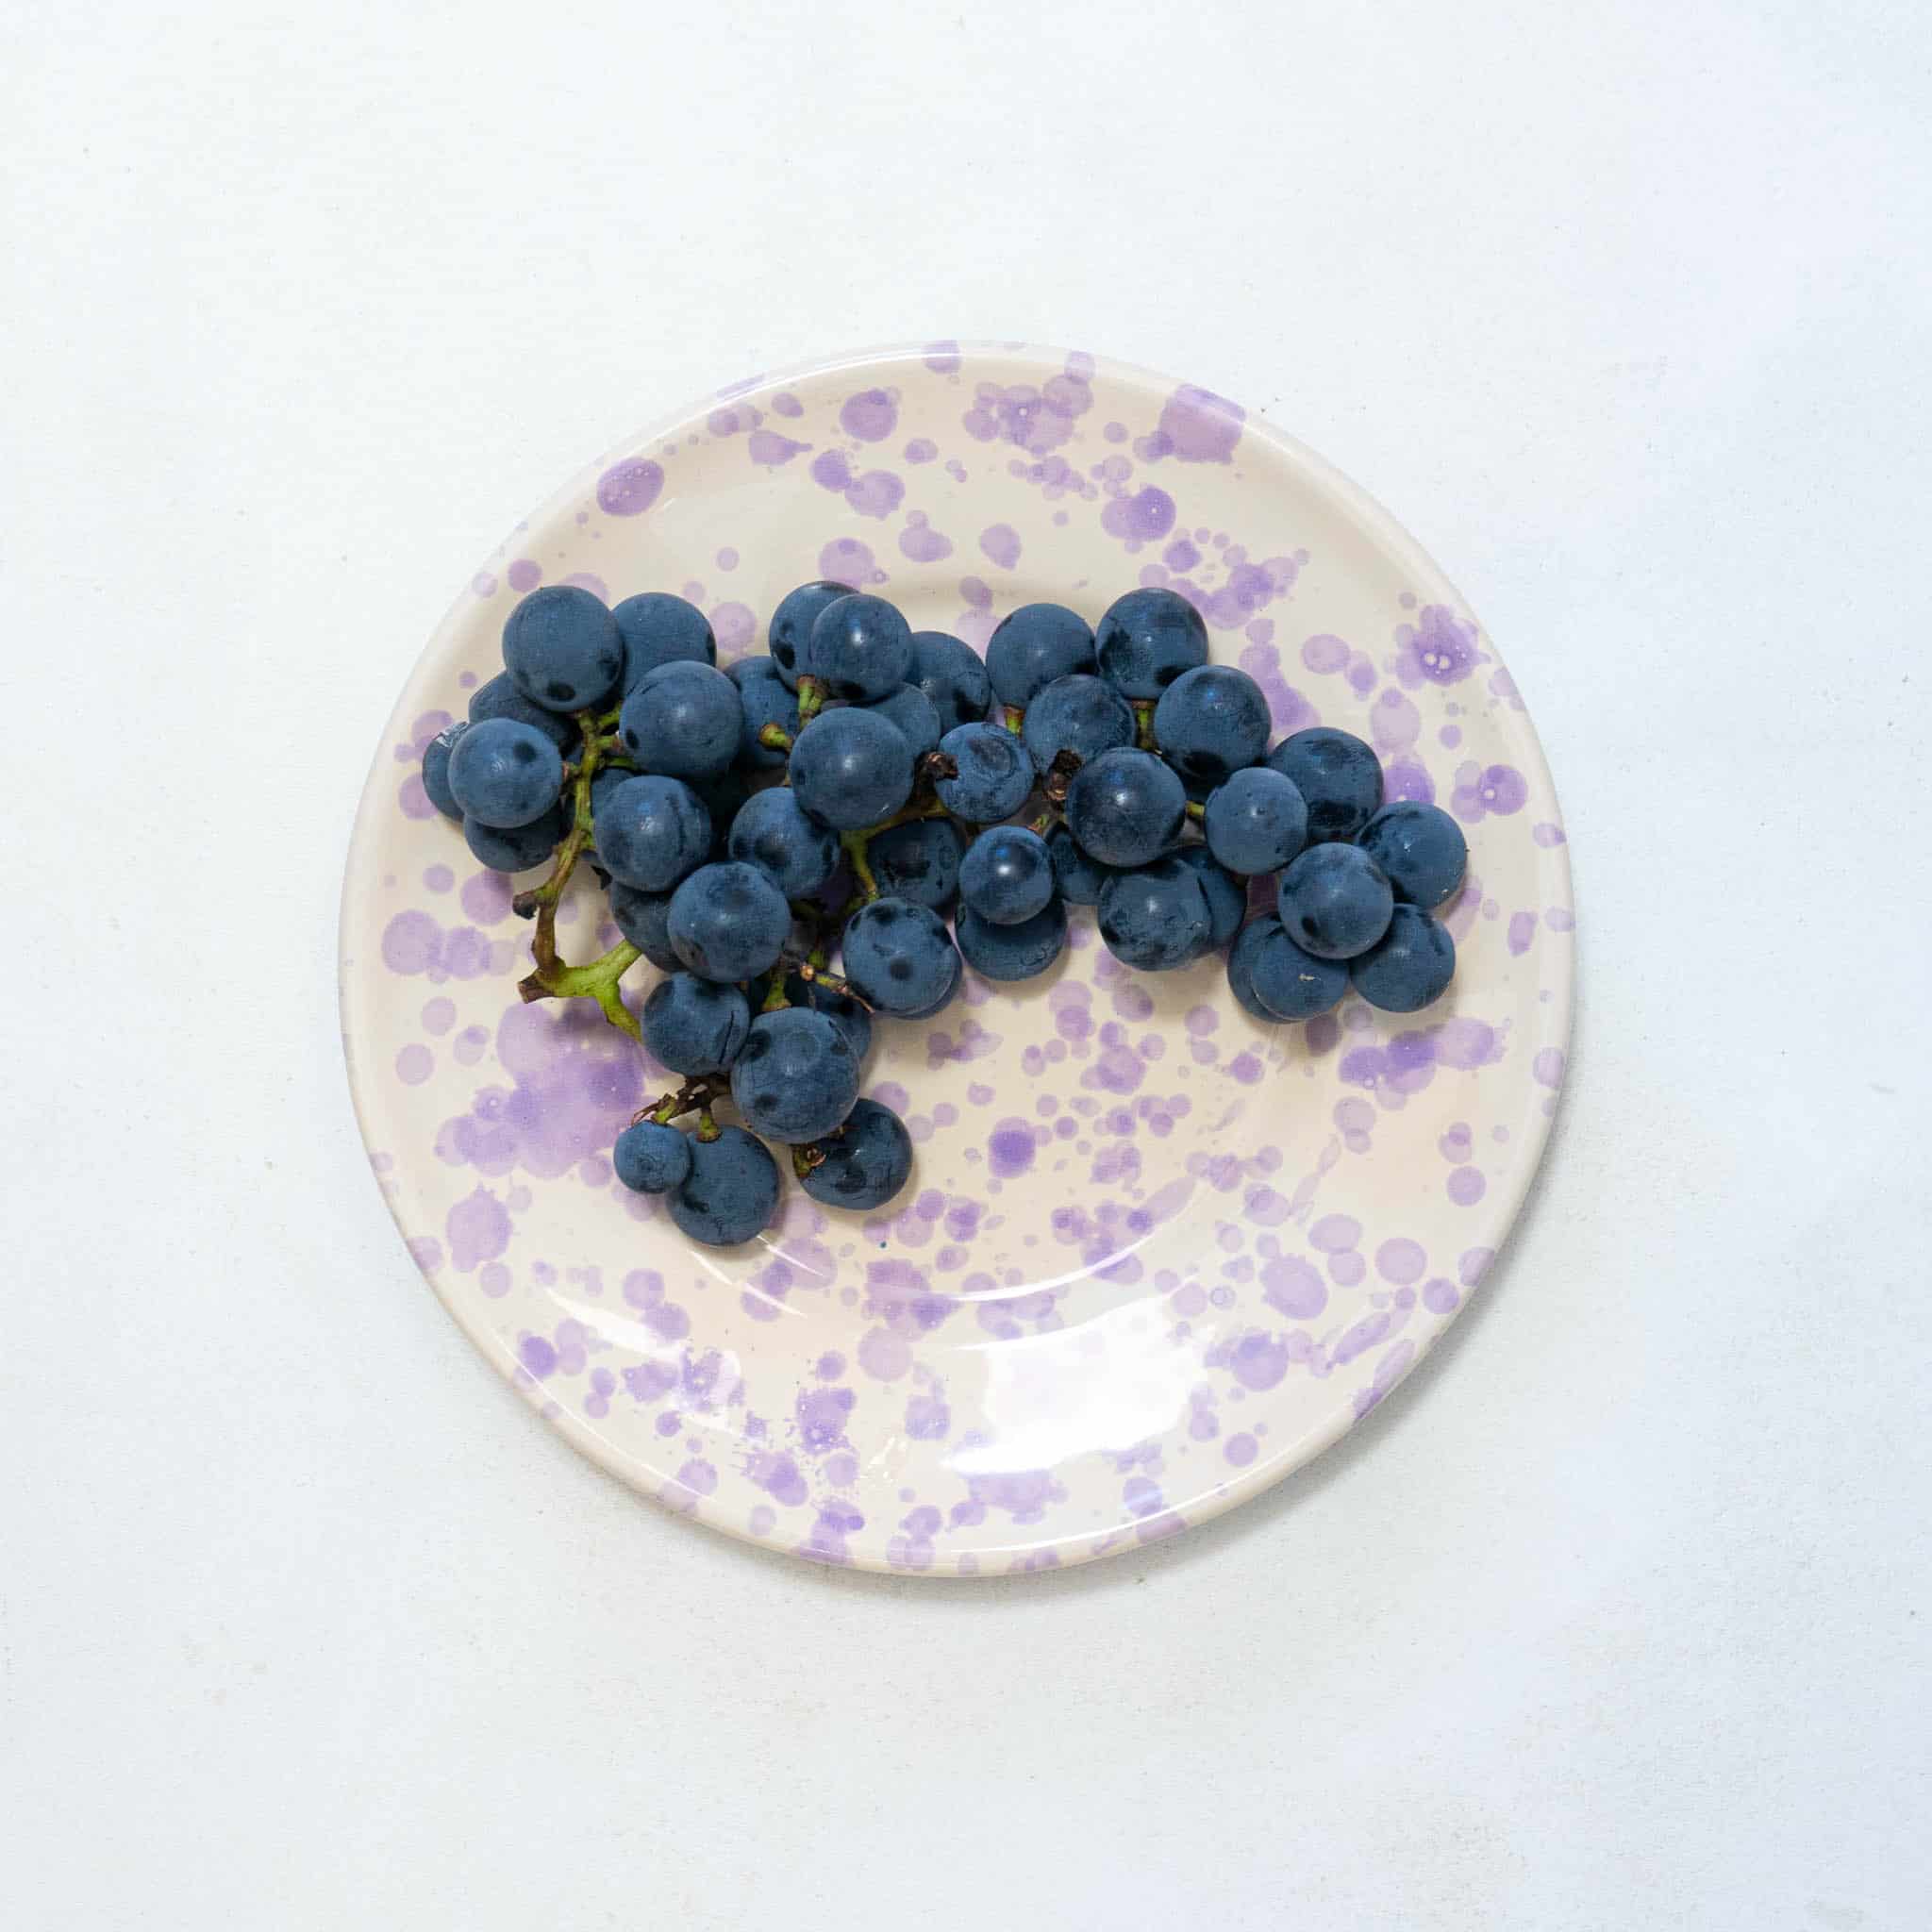 Puglia Lilac Splatter Side Plate, 19cm